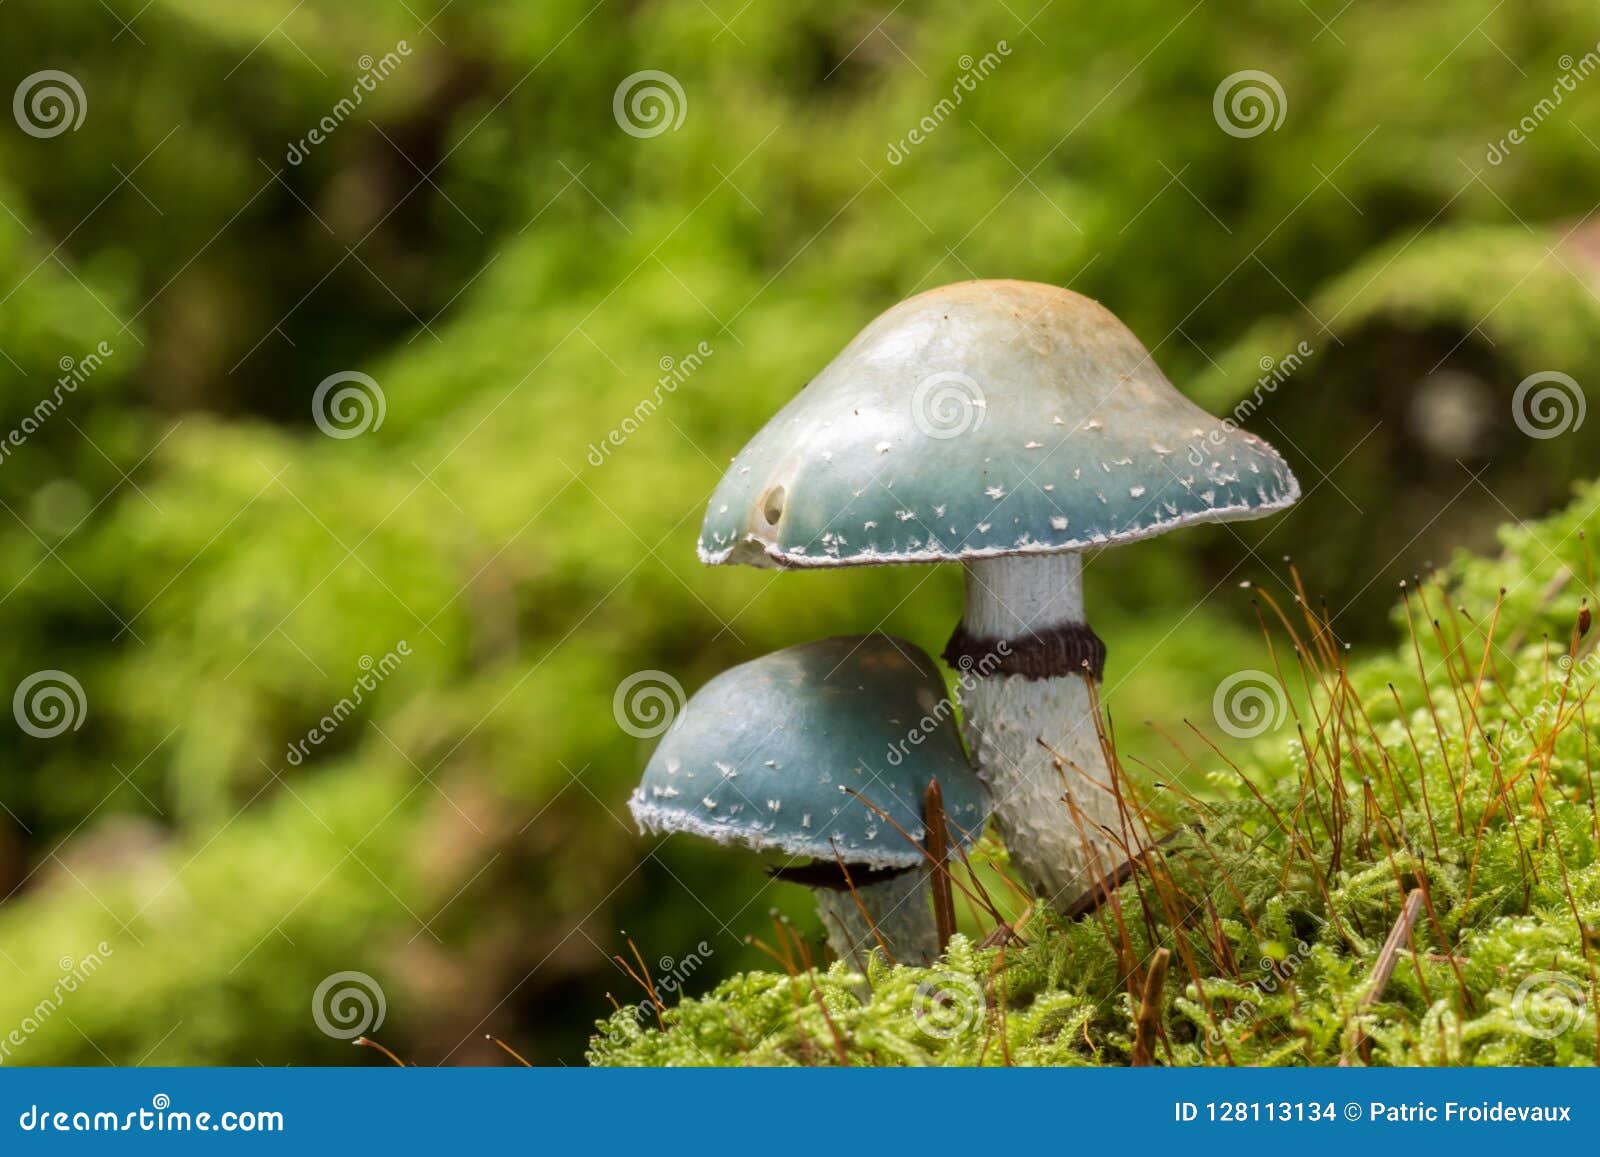 two verdigris agarics mushrooms - stropharia aeruginosa - growing in moss